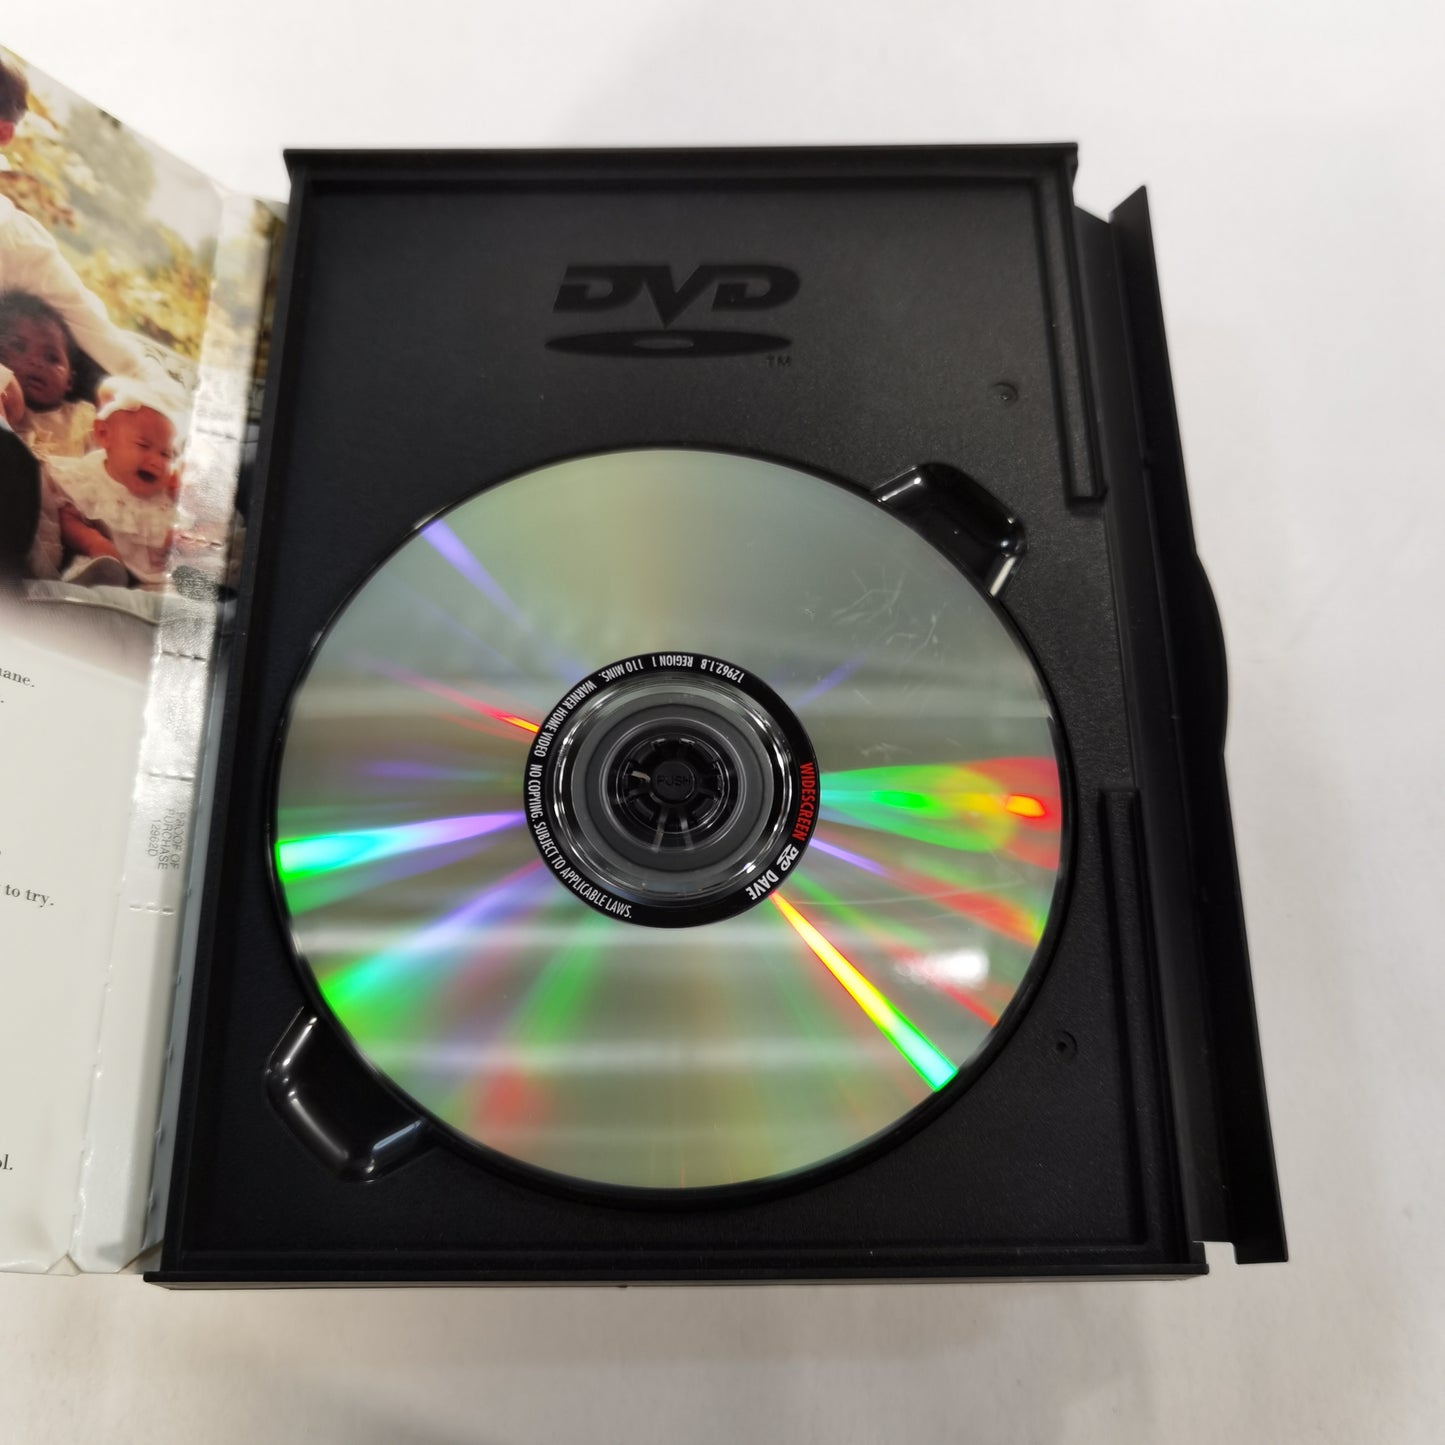 Dave (1993) - DVD US 1998 Snap Case